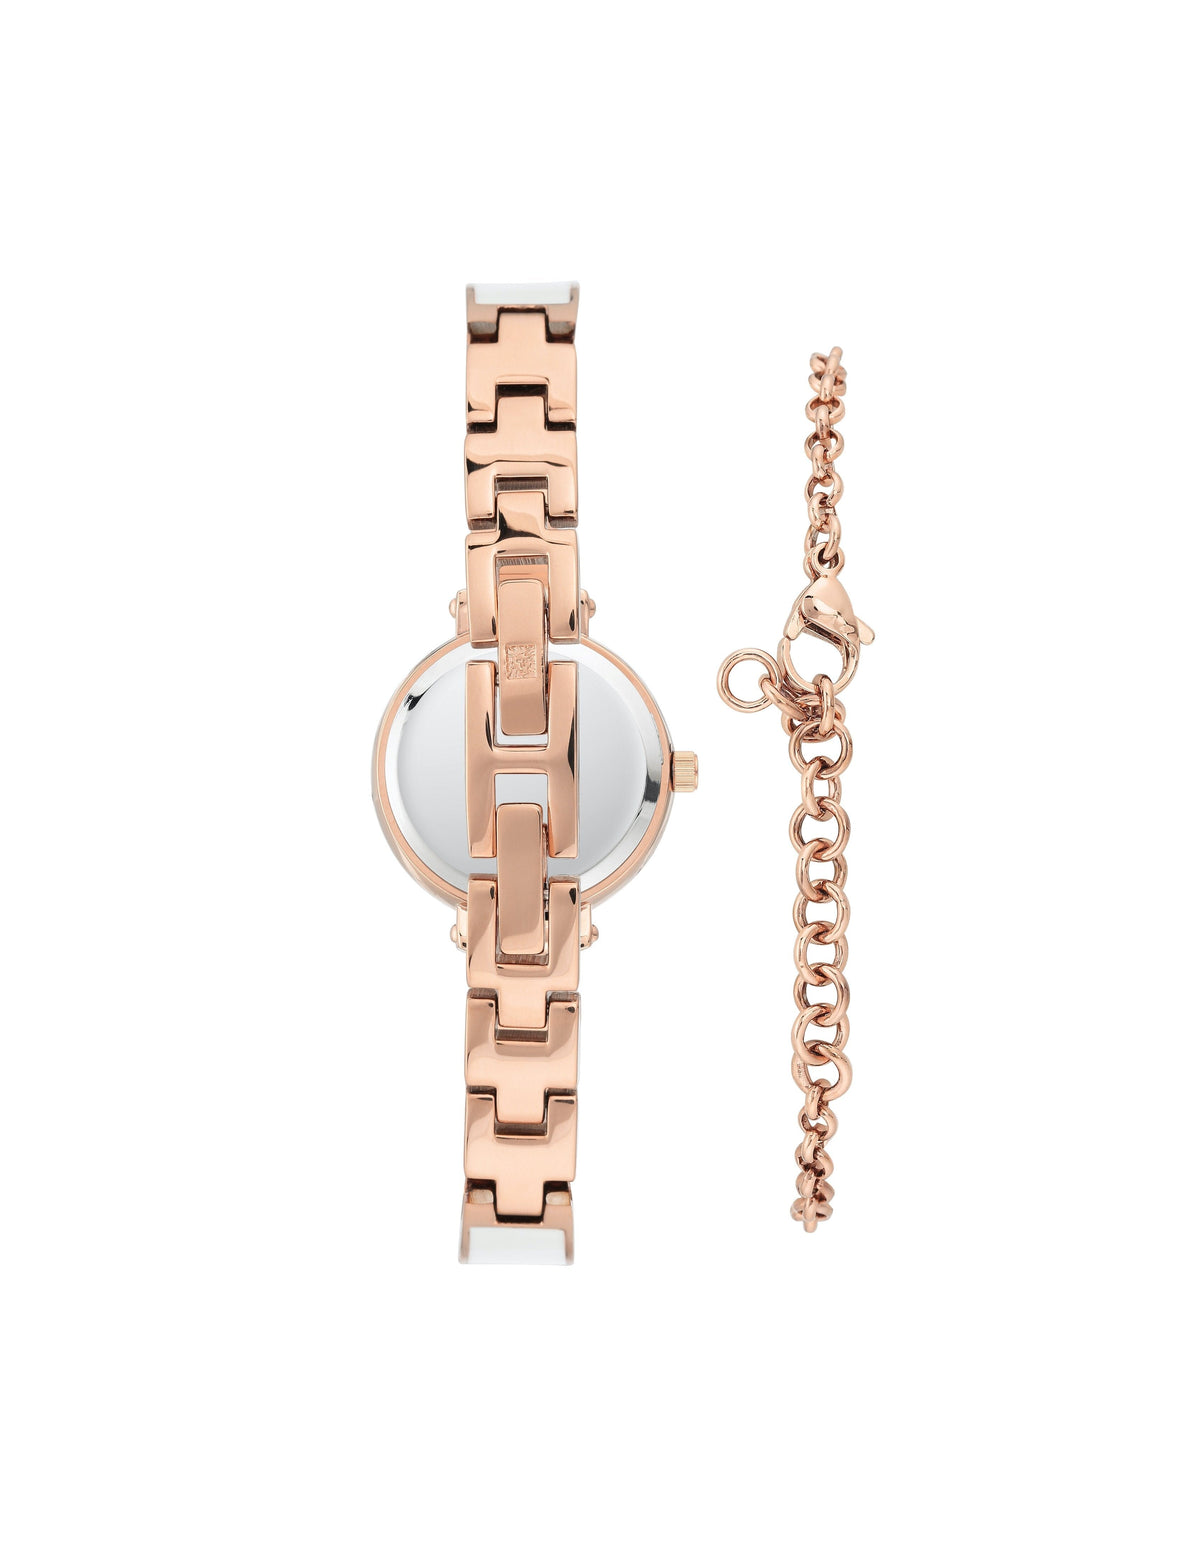 White Rose Gold Genuine Diamond Dial Bangle Watch Bracelet Set